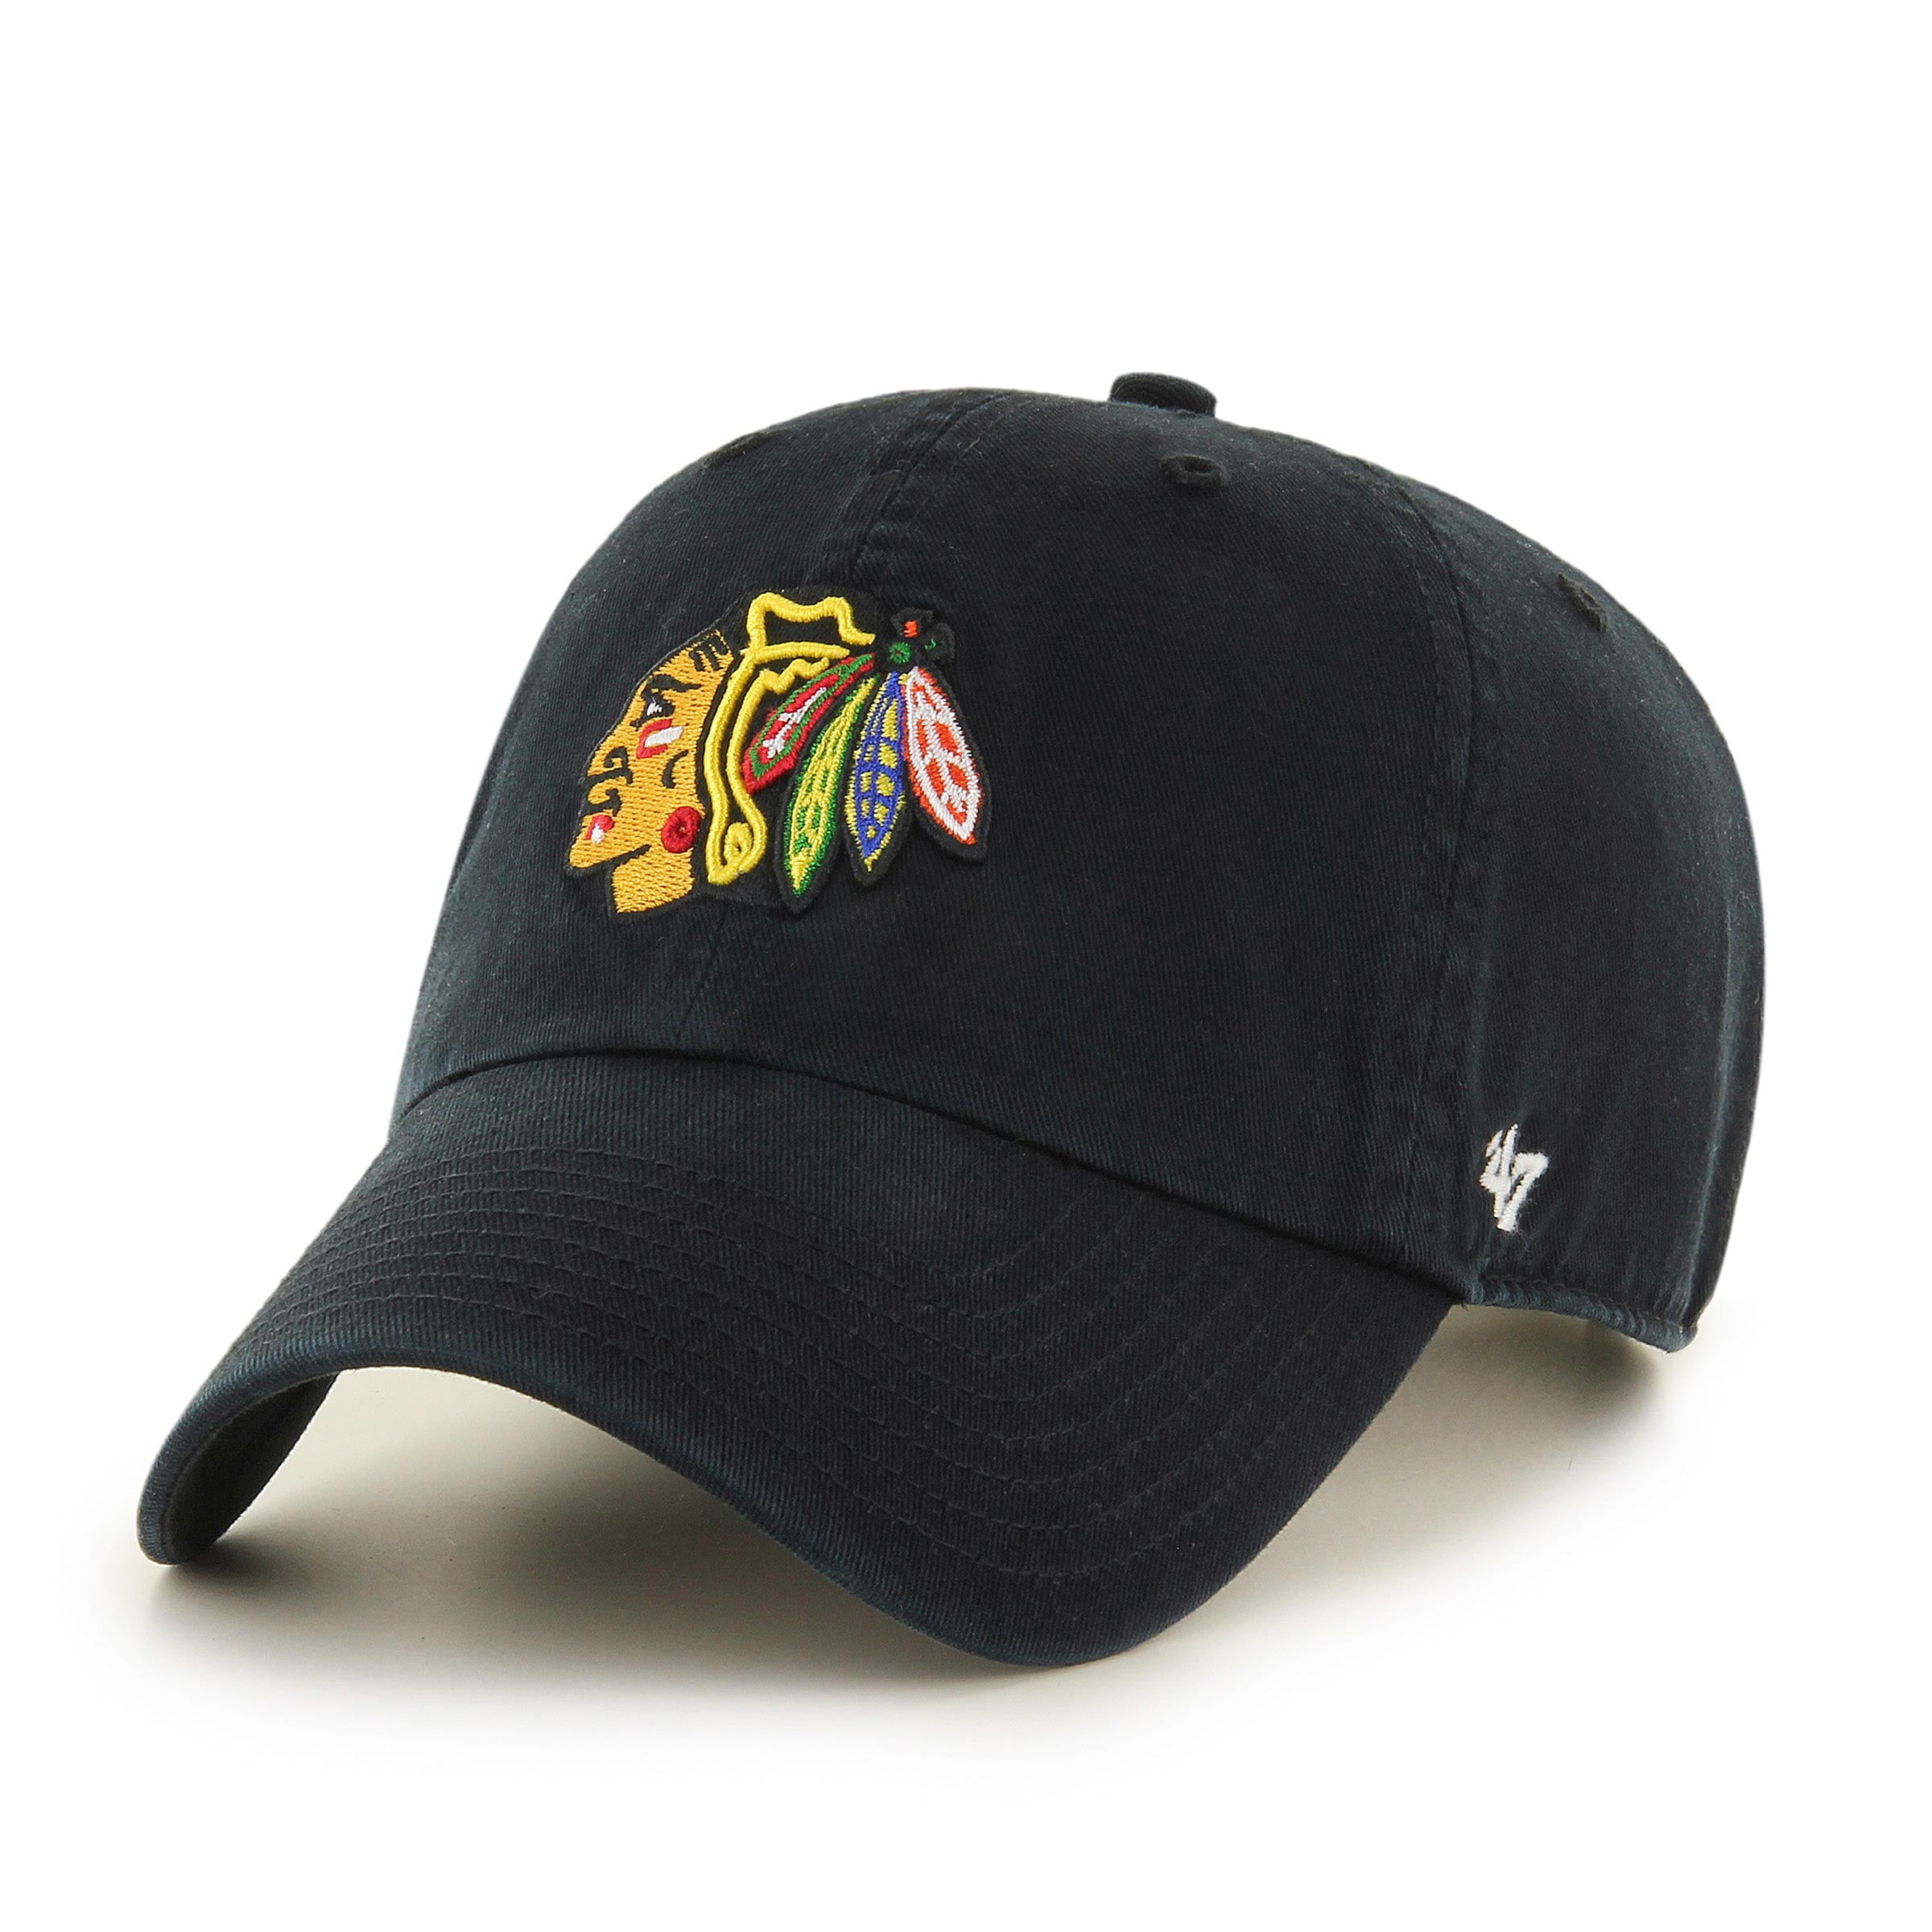 blackhawks cap